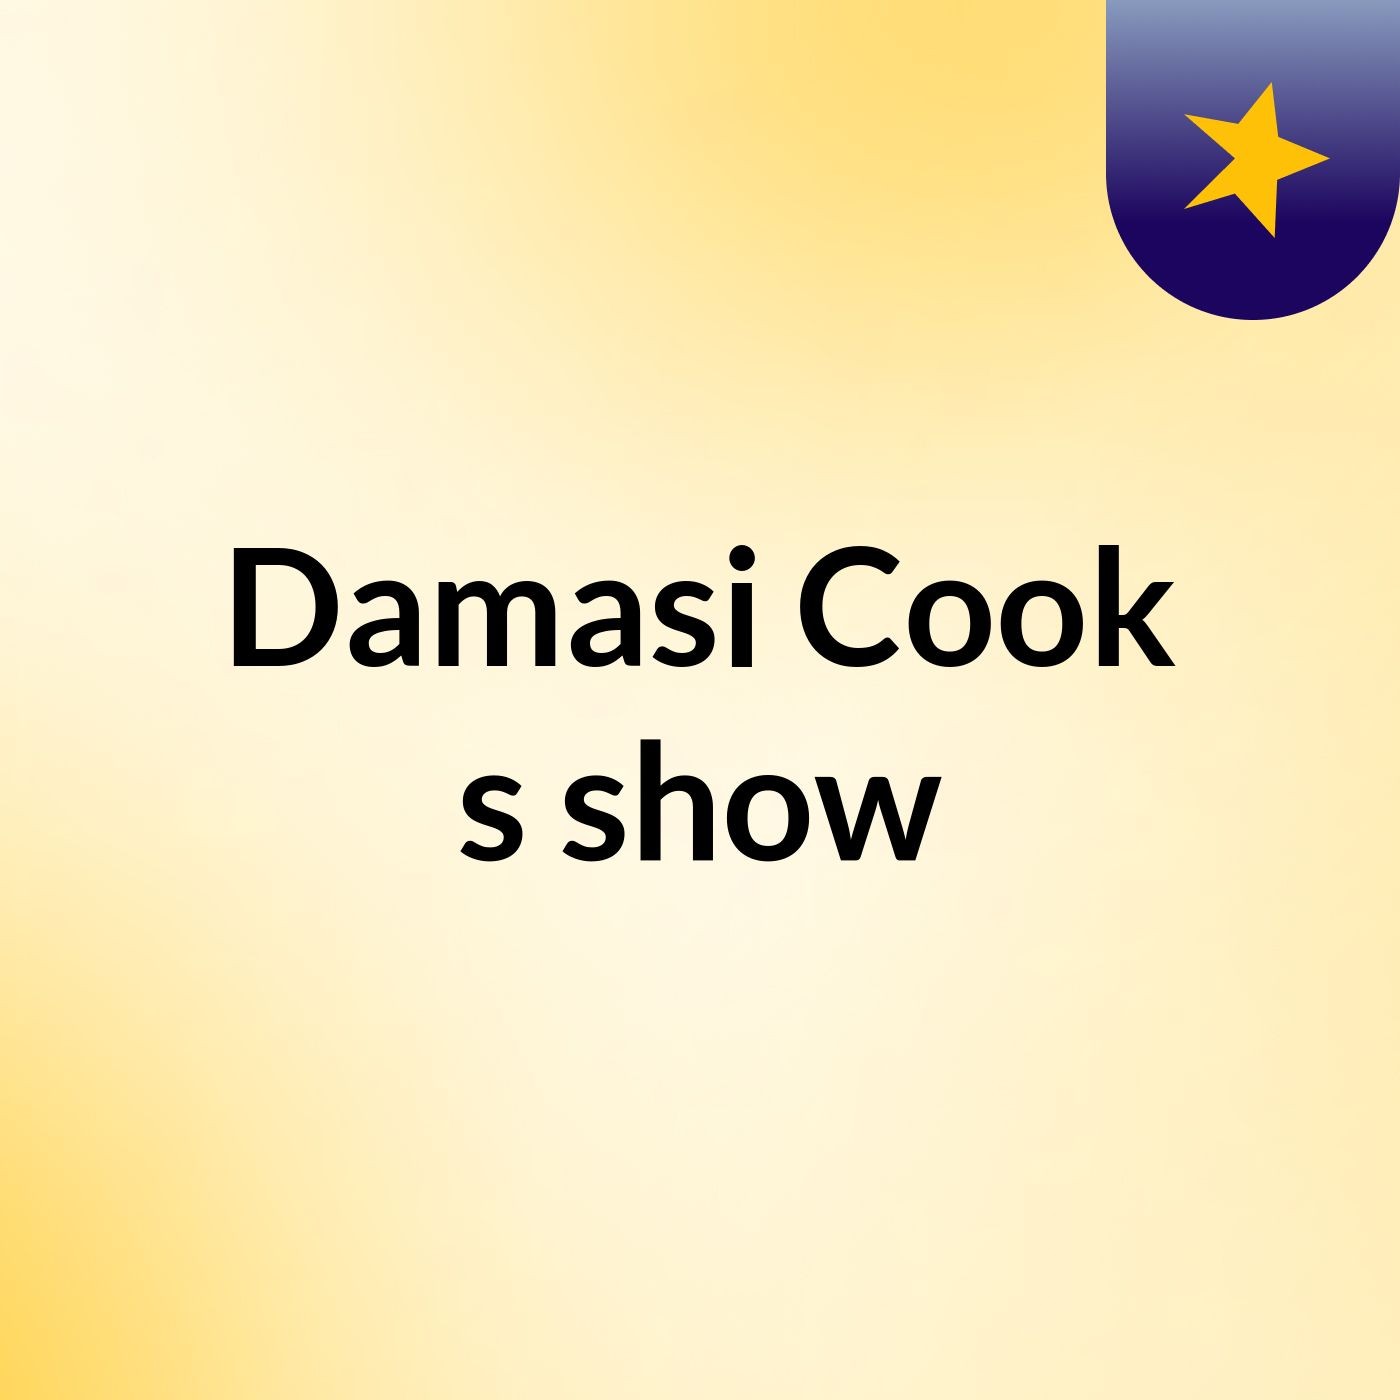 Episode 5 - Damasi Cook's show